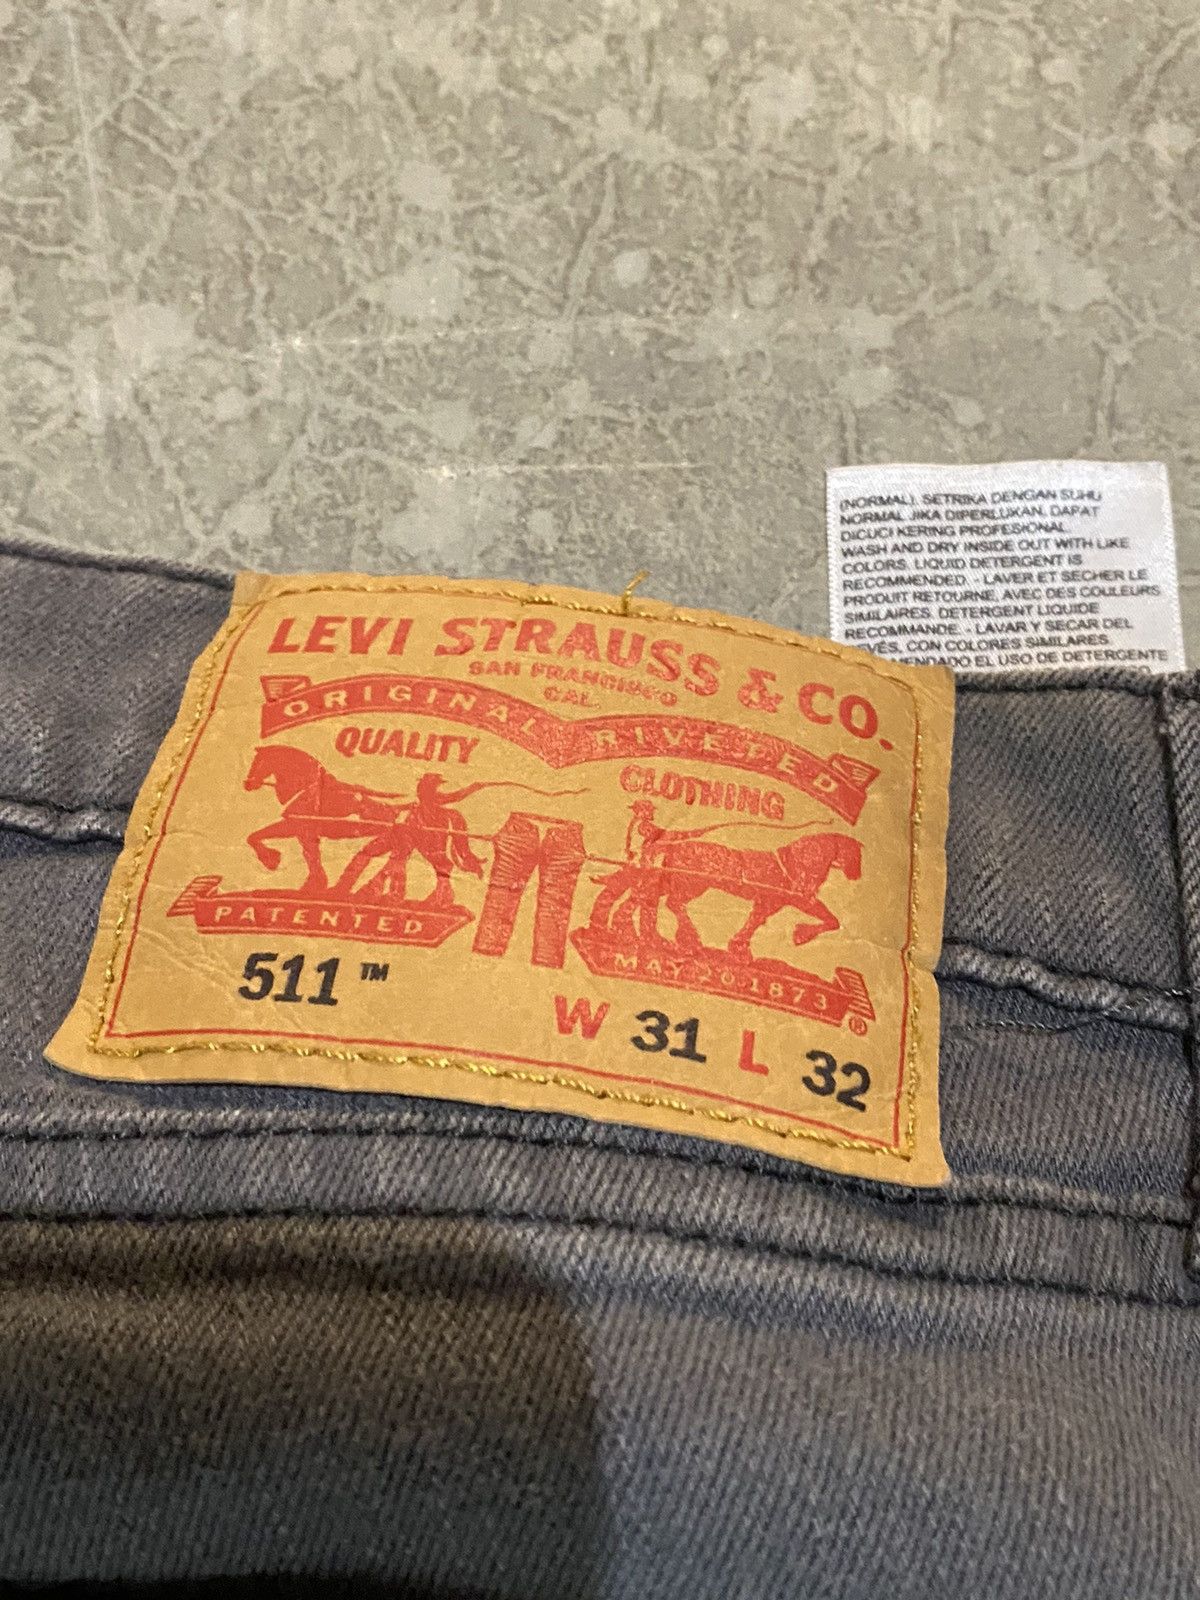 Vintage Grey Levi 511 Jeans 31x32 Size US 31 - 10 Thumbnail